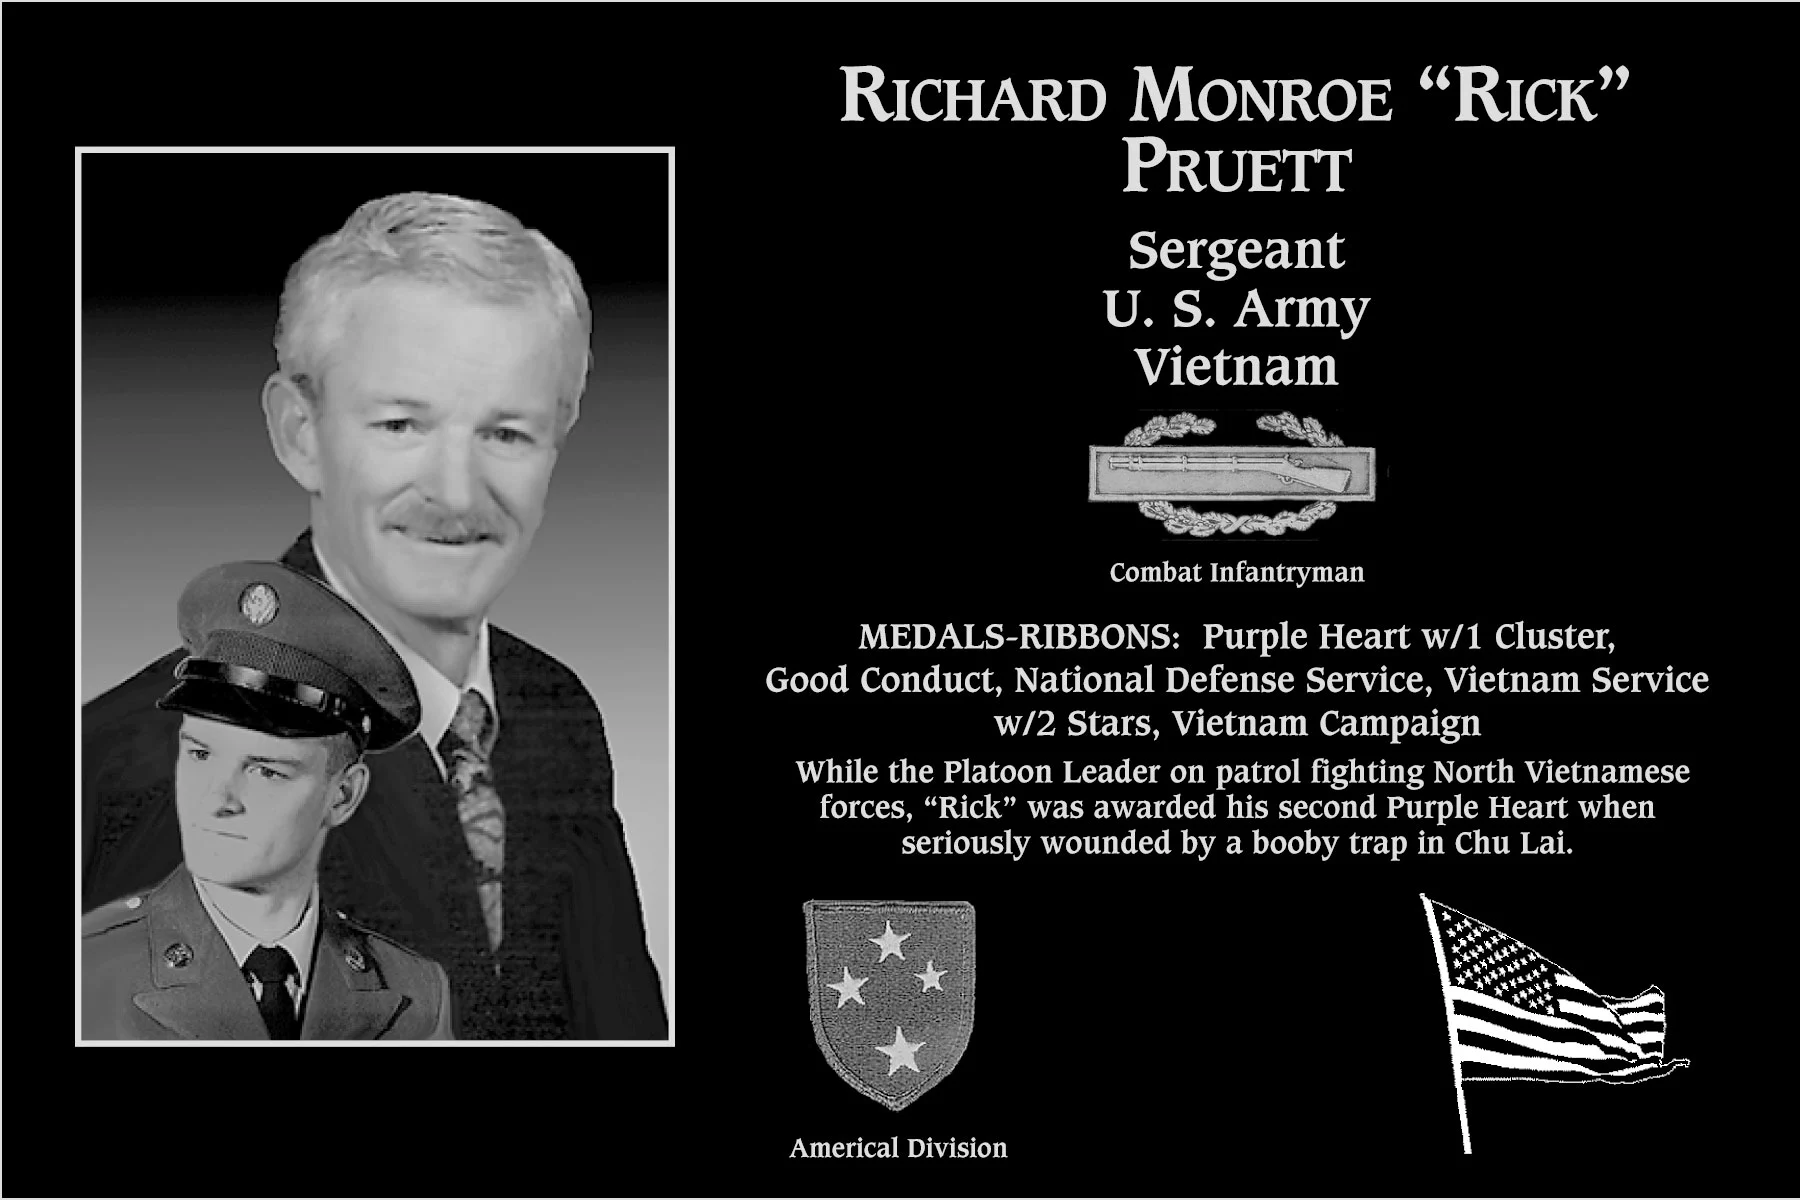 Richard Monroe “Rick” Pruett